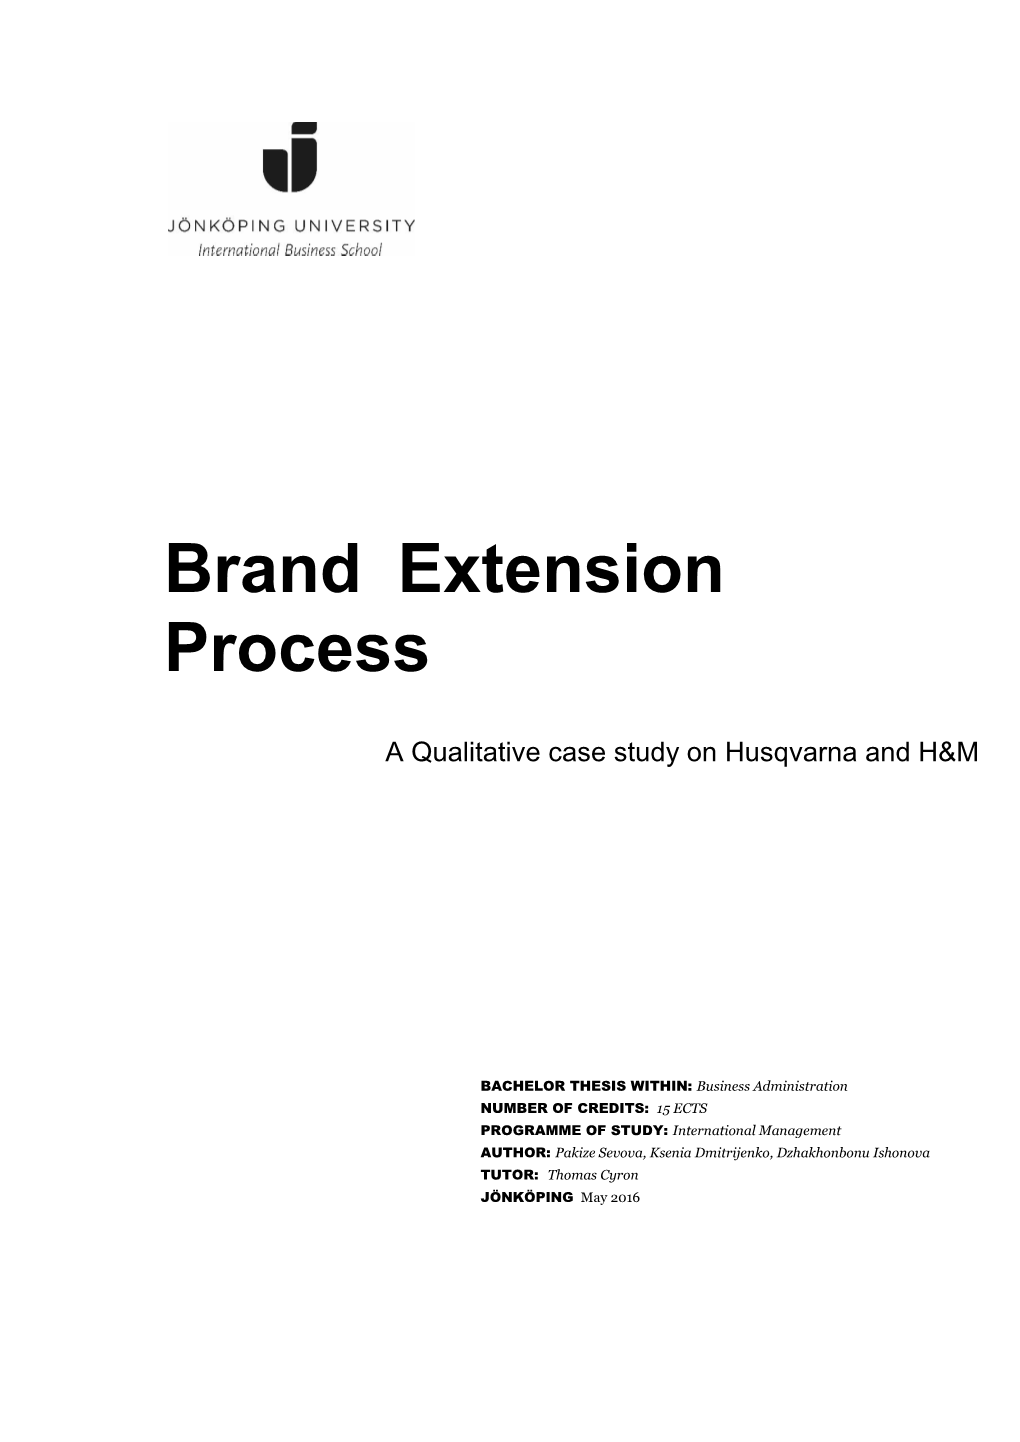 Brand Extension Process